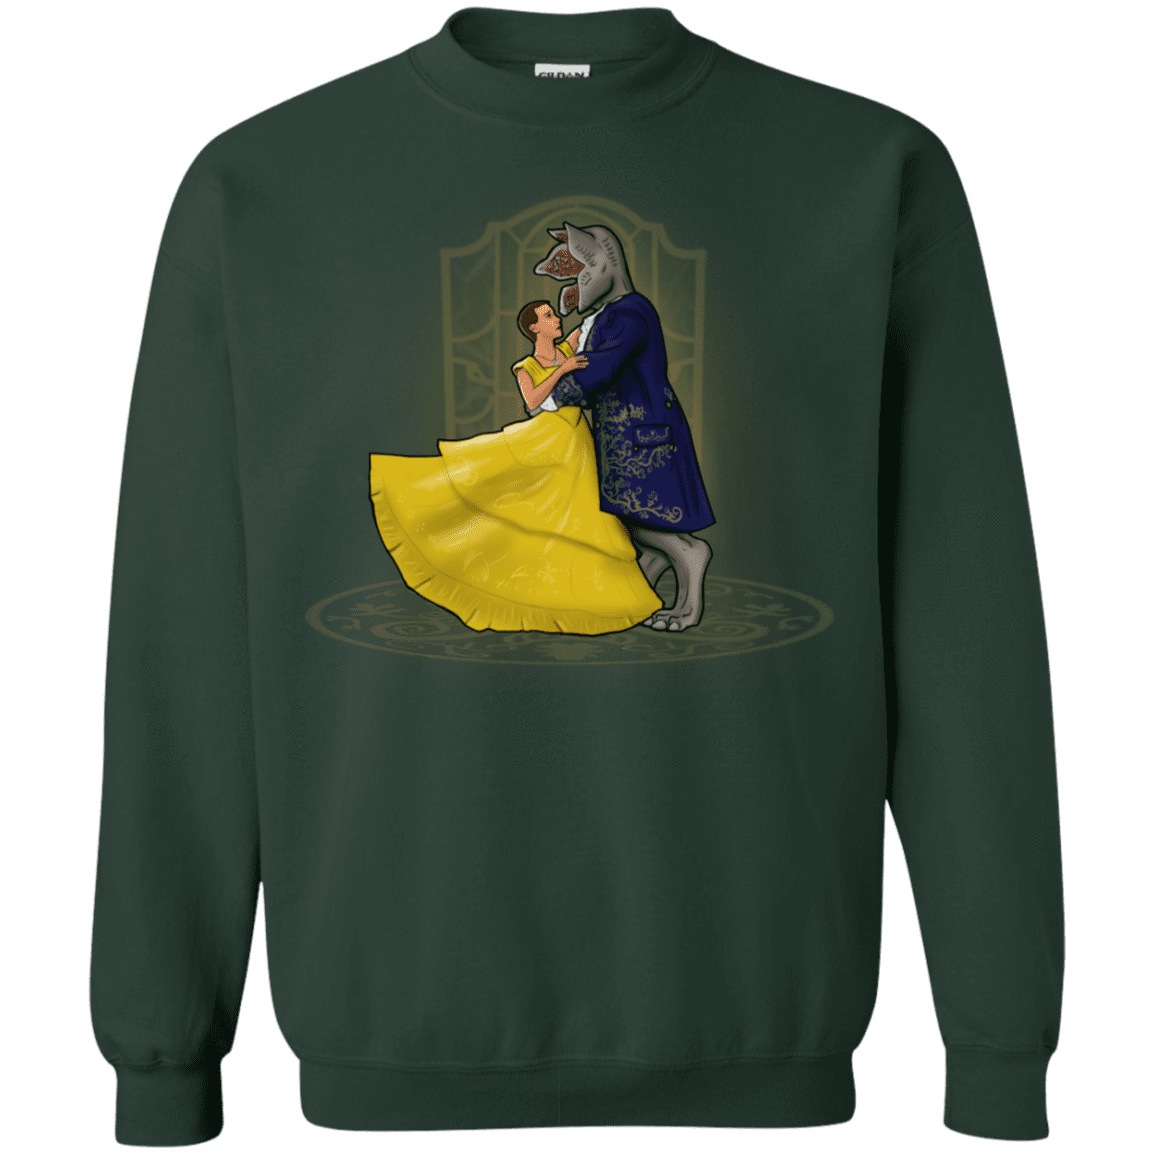 Sweatshirts Forest Green / S Eleveny the Beast Crewneck Sweatshirt